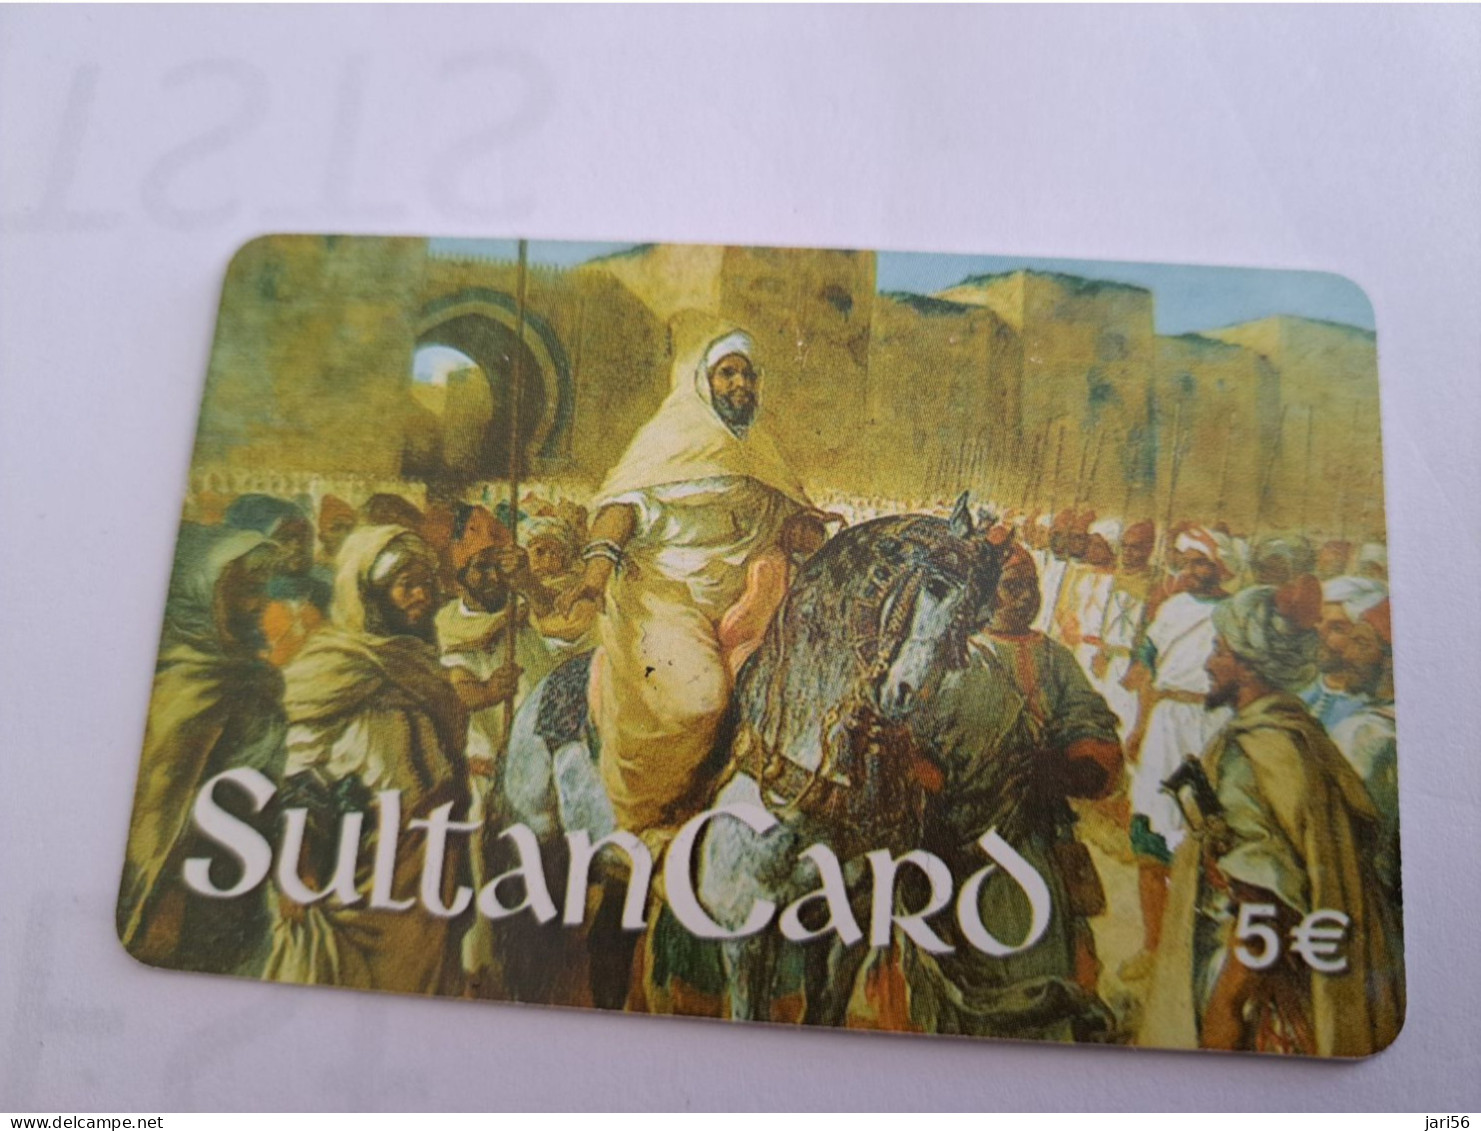 DUITSLAND/GERMANY  € 5,- / SULTANCARD/ MAN ON HORSE/ ARABIC    ON CARD        Fine Used  PREPAID  **16534** - Cellulari, Carte Prepagate E Ricariche